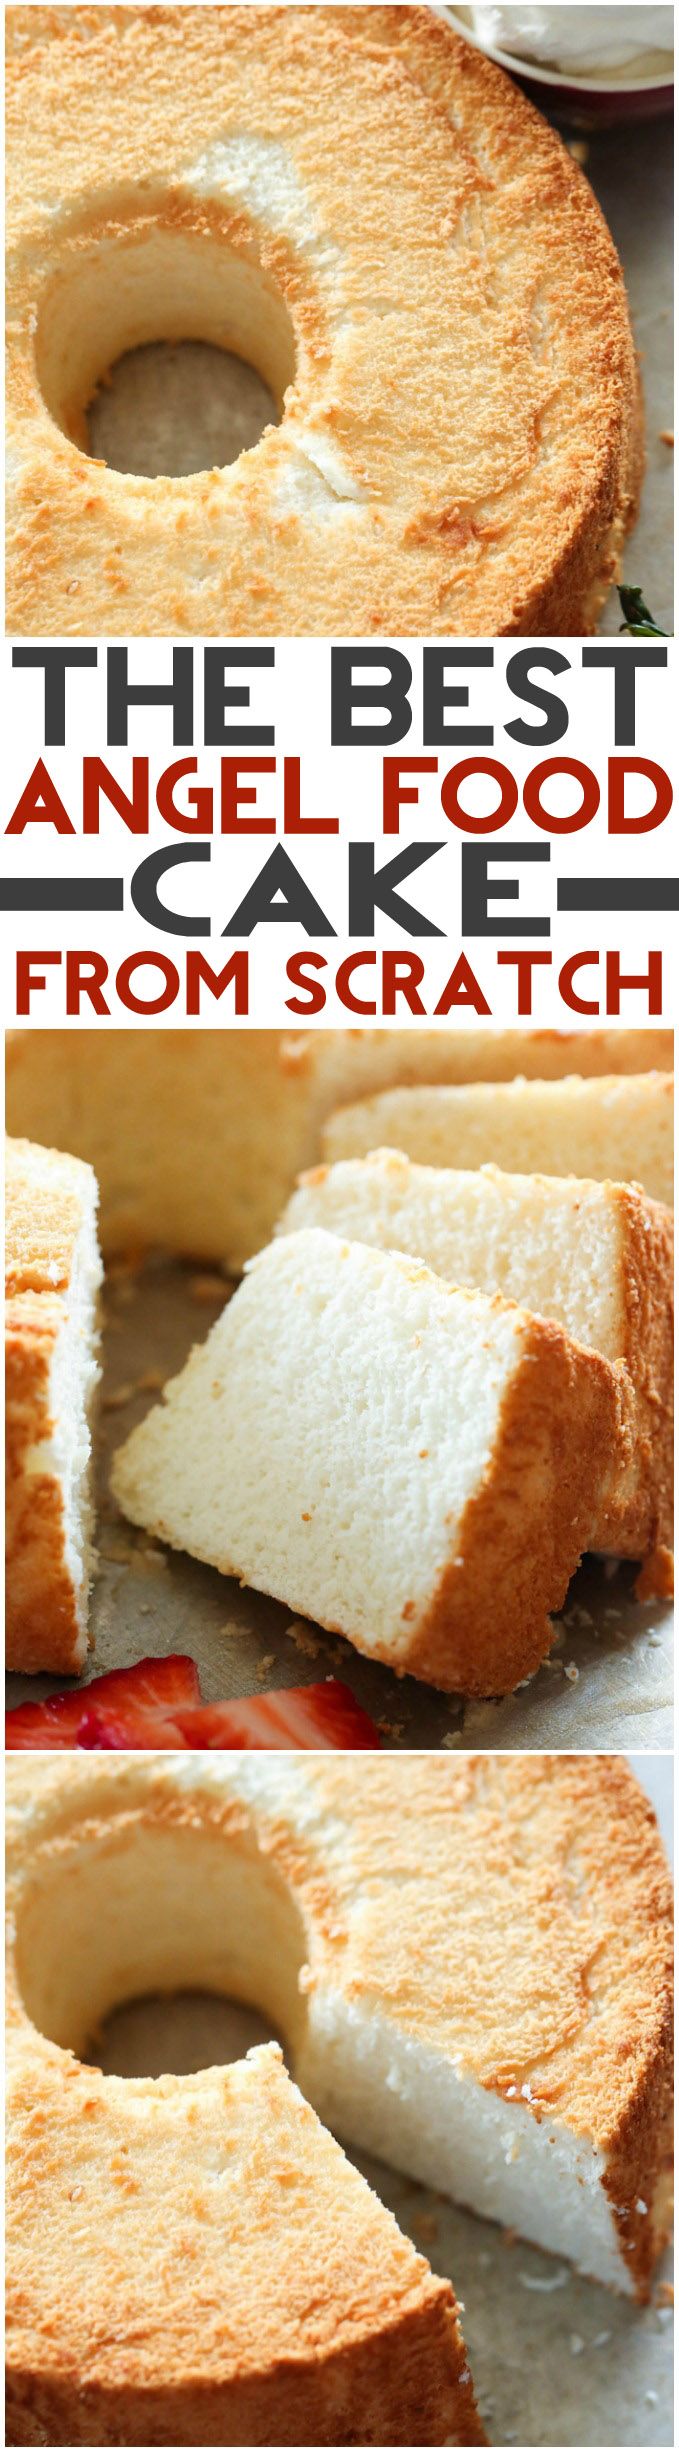 Best Angel Food Cake Recipe From Scratch